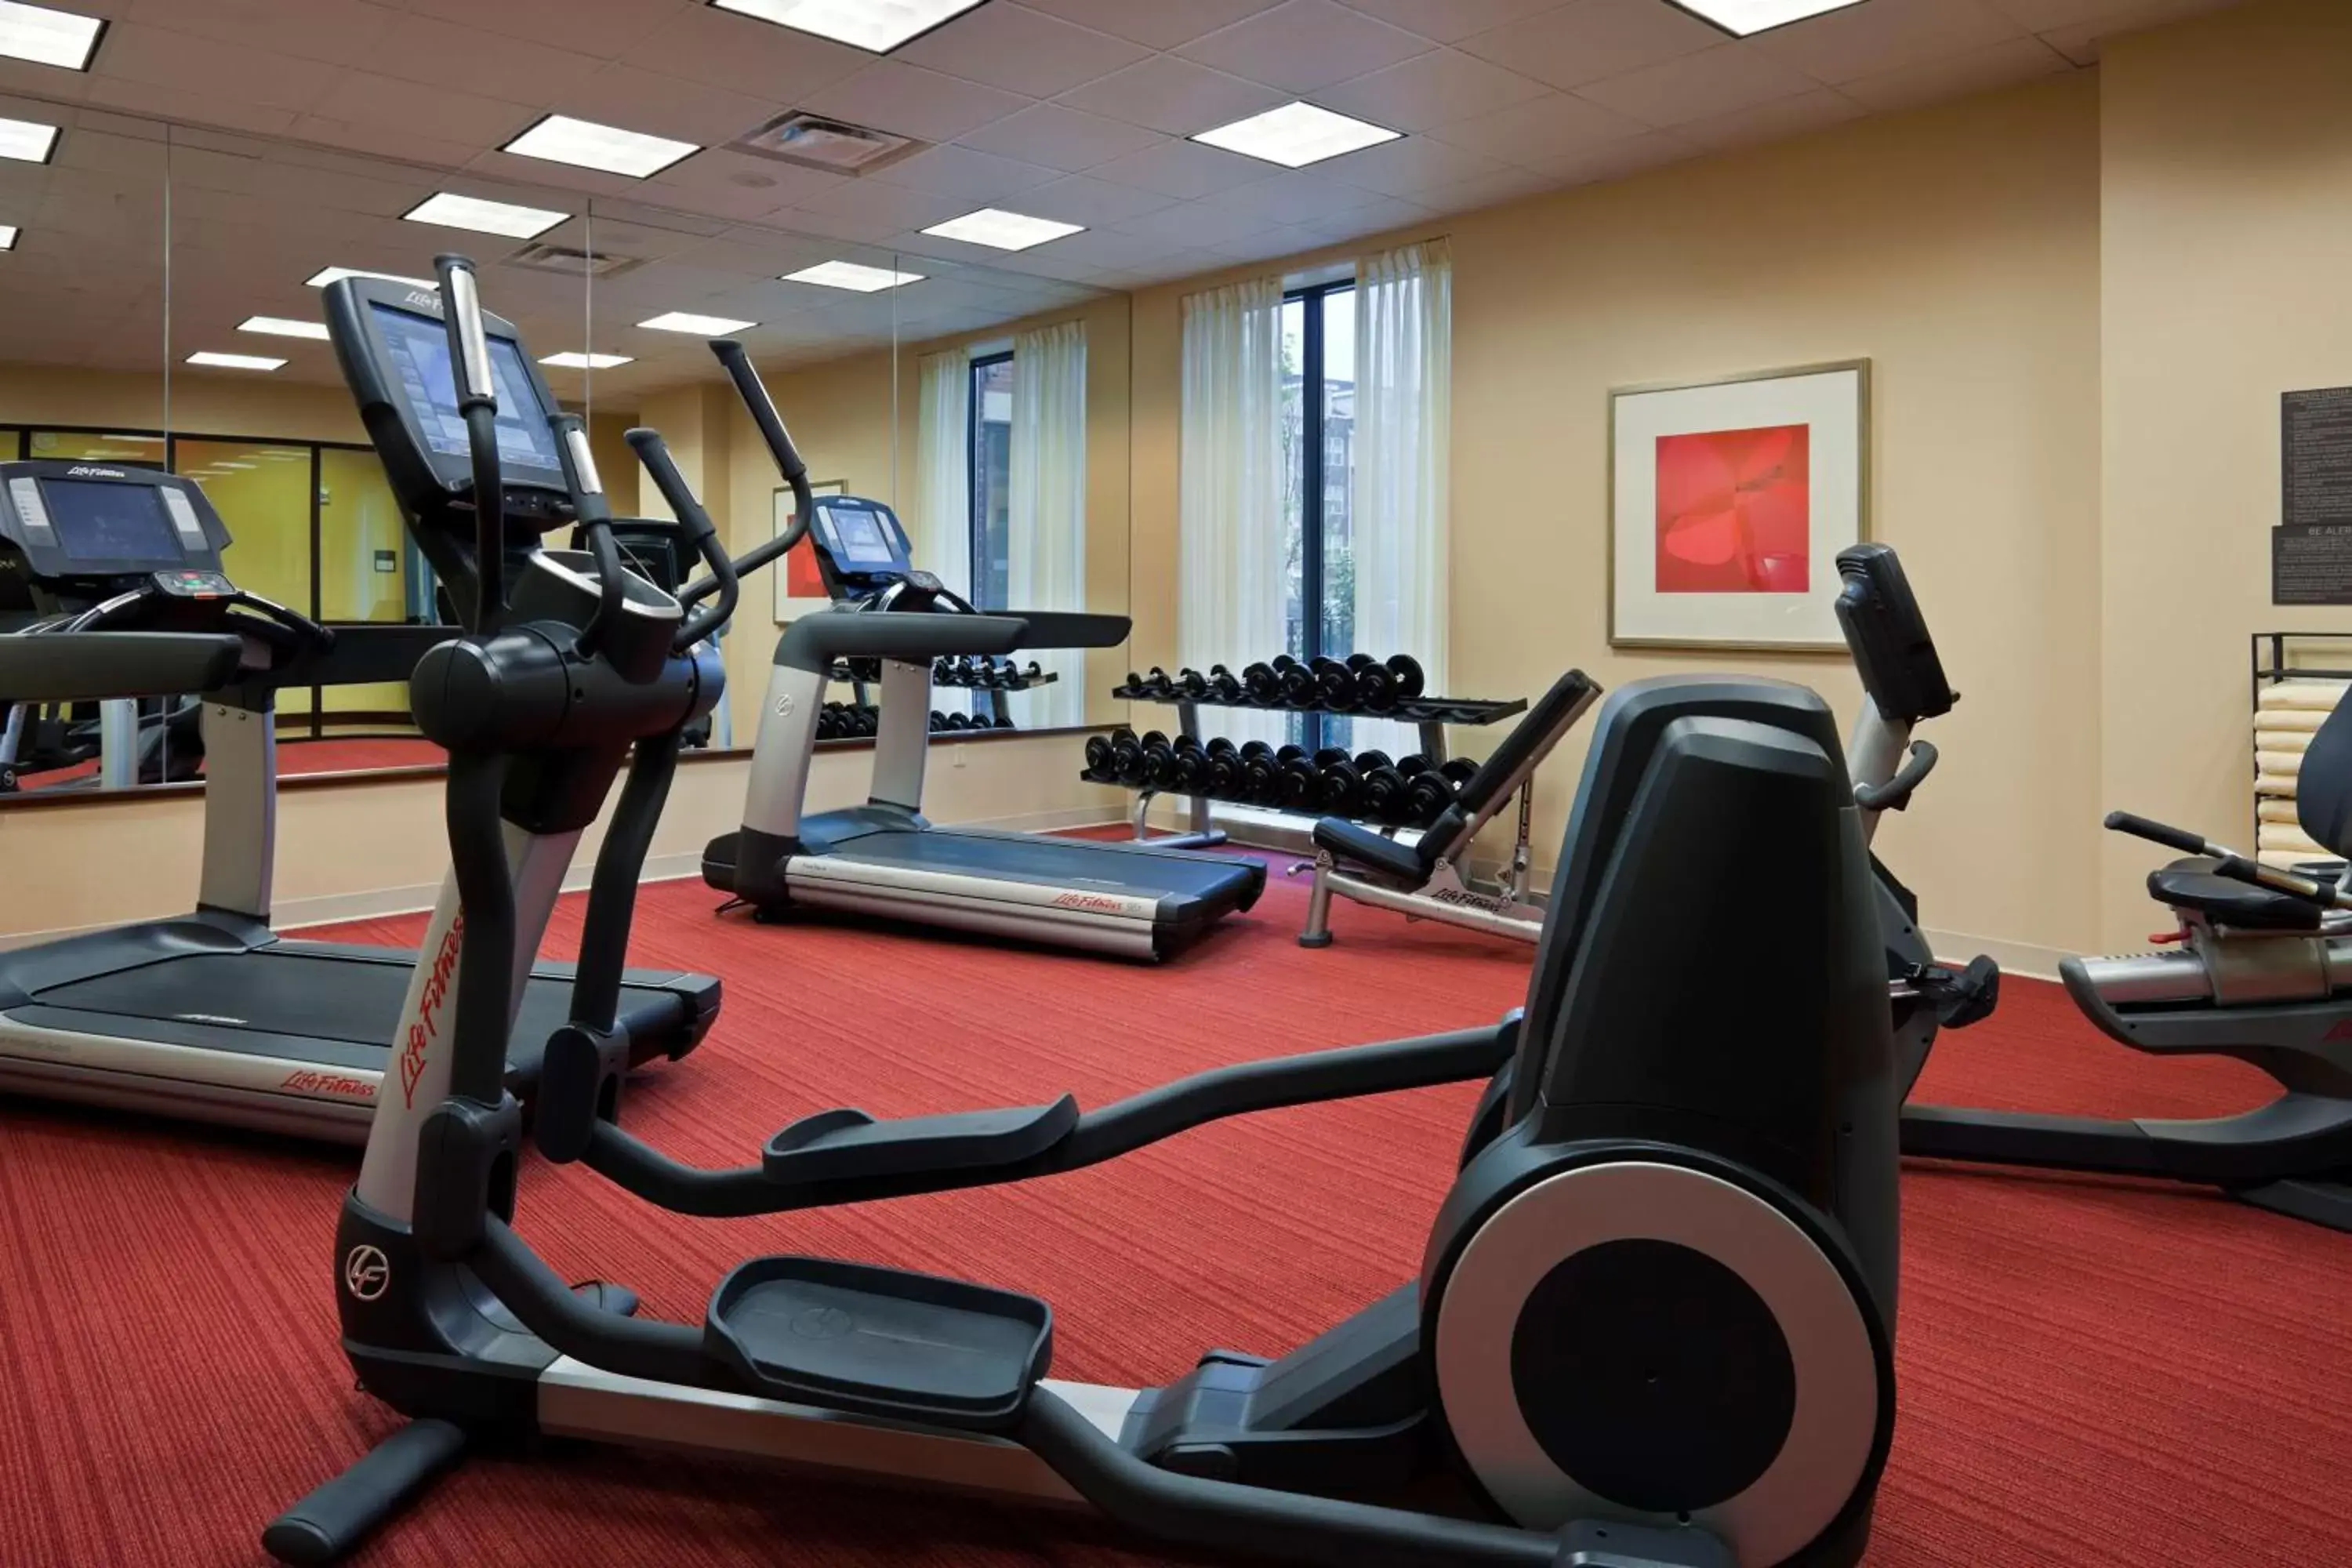 Fitness centre/facilities, Fitness Center/Facilities in Hyatt Place Chesapeake